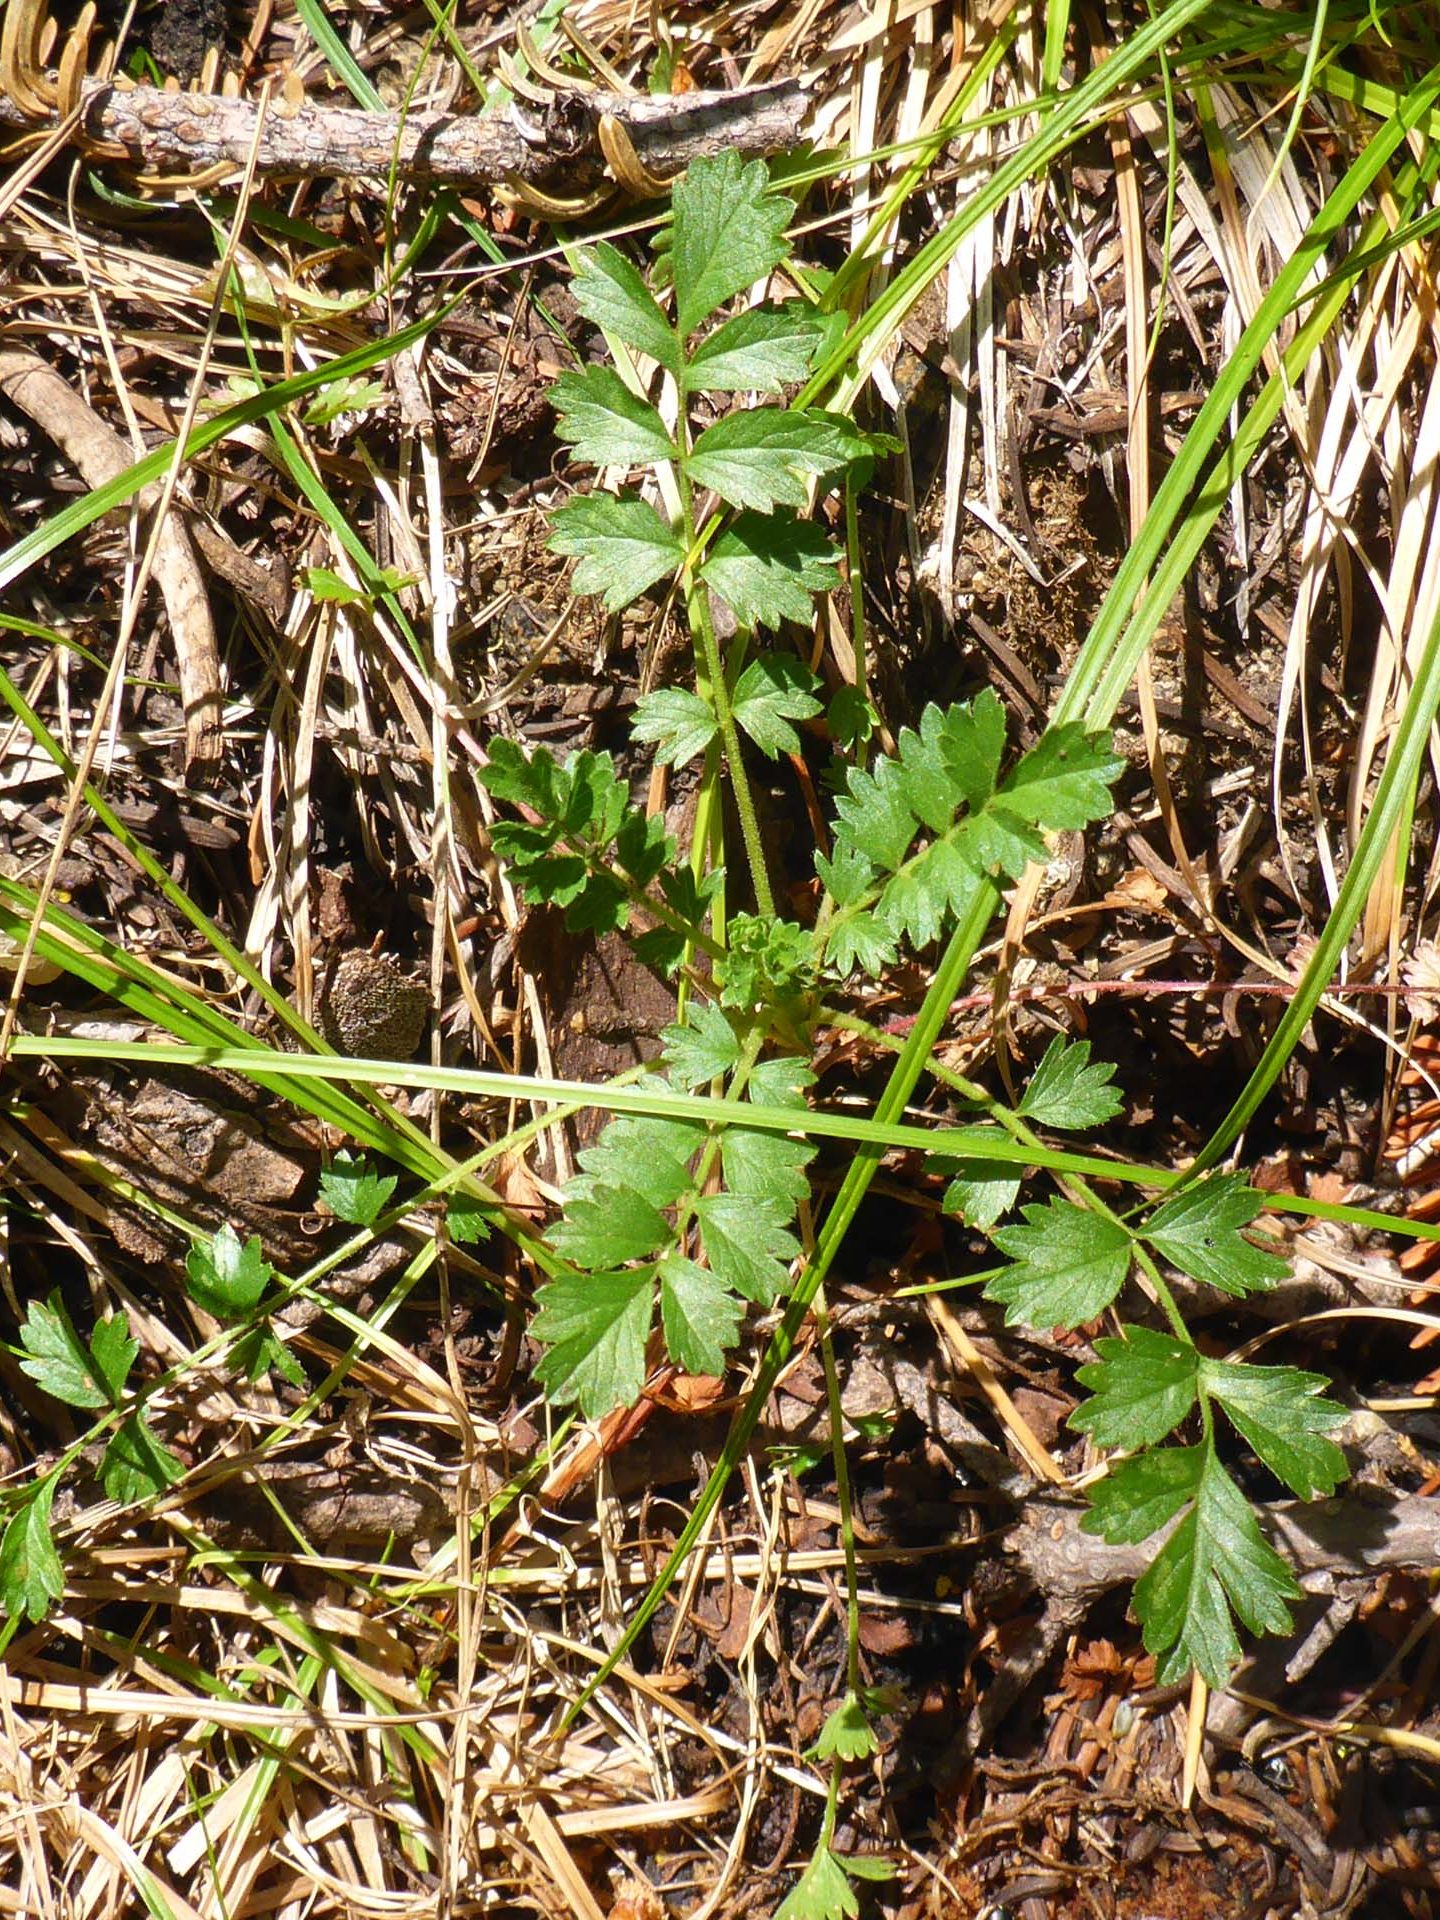 Small-flowered horkelia vewgetative growth. D. Burk.